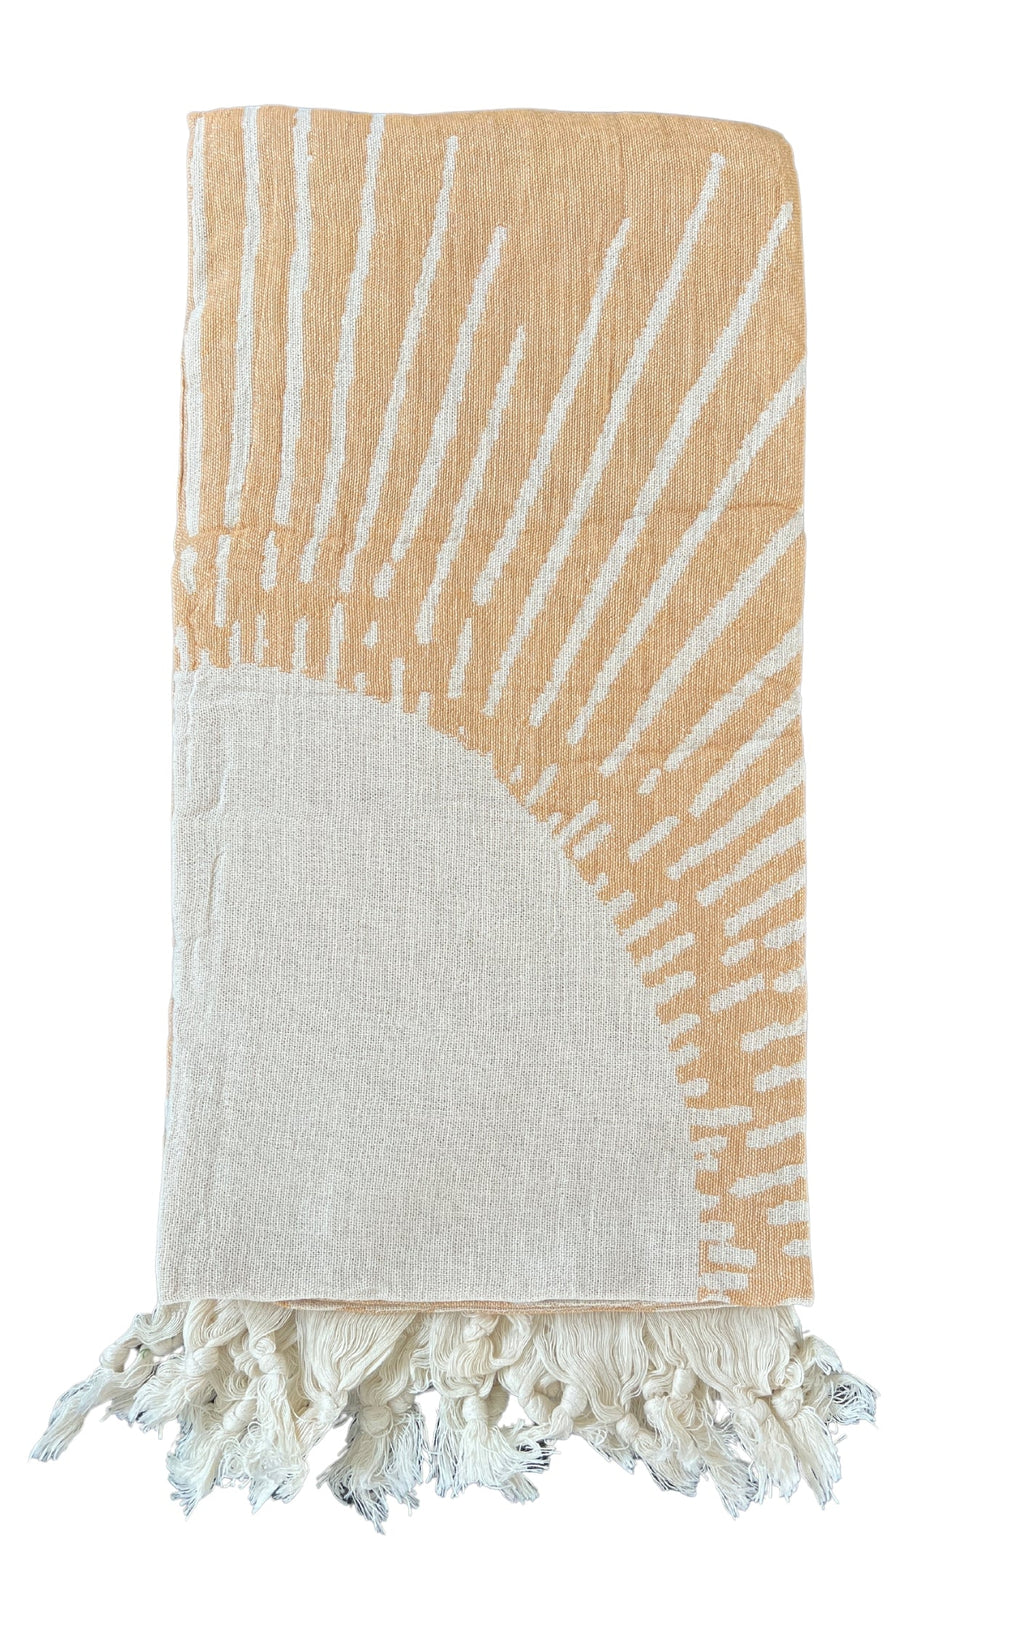 salty shadows - turkish towel sun pattern - mustard